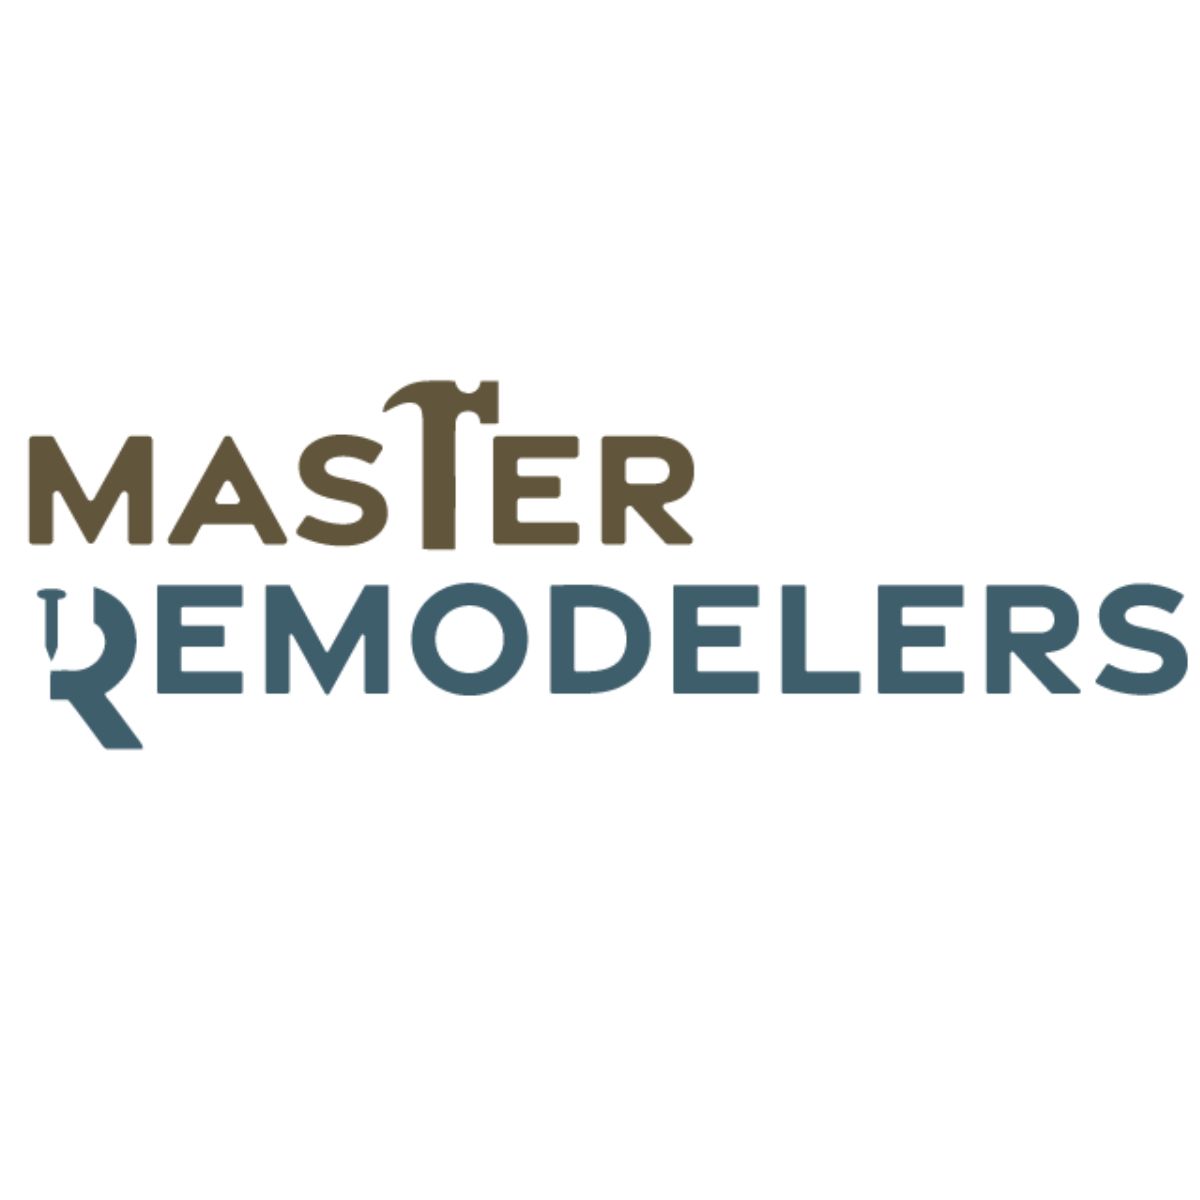 Master Remodelers, LLC